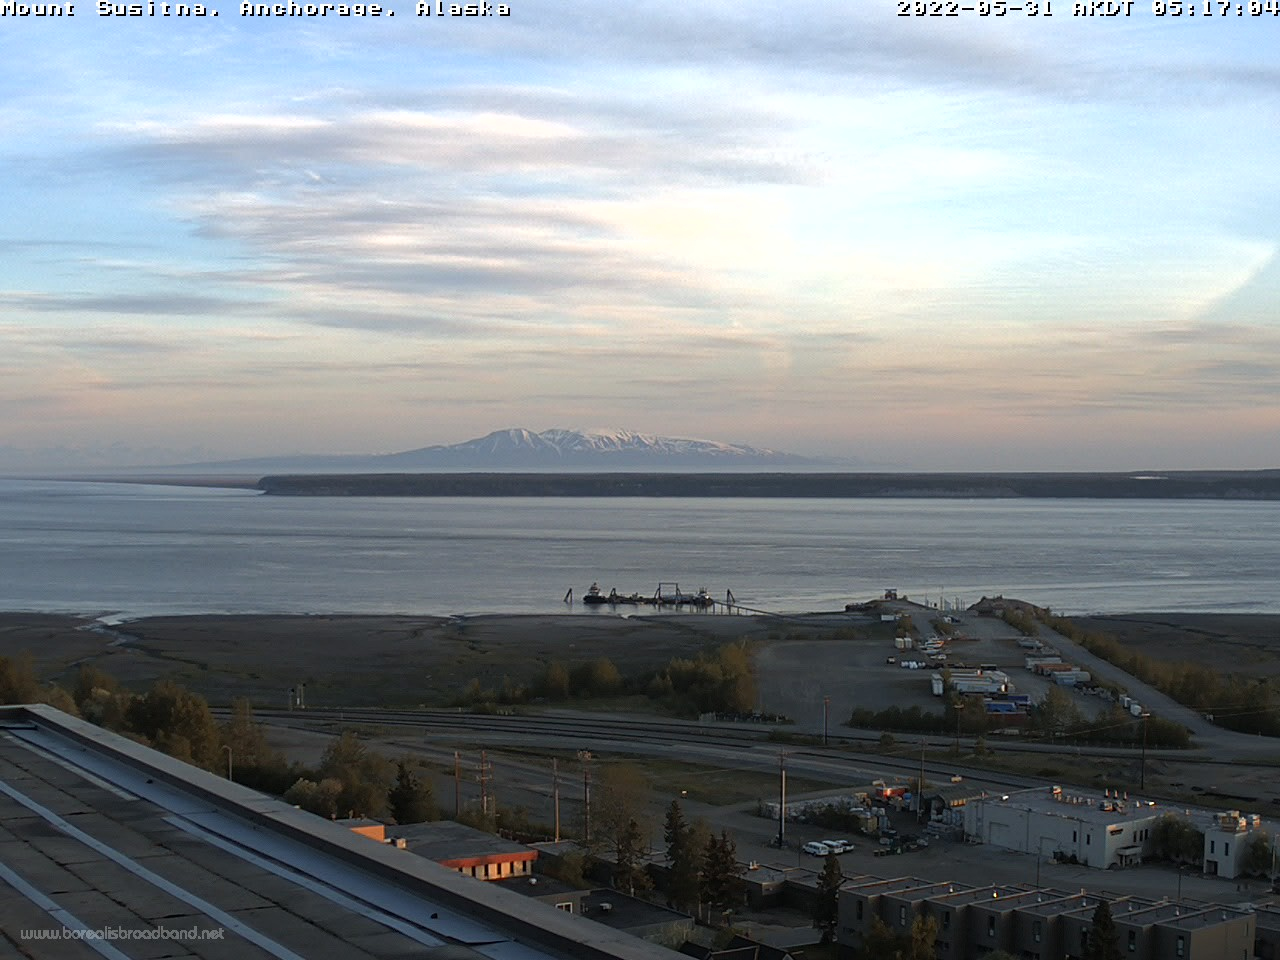 Mount Susitna, Anchorage, Alaska